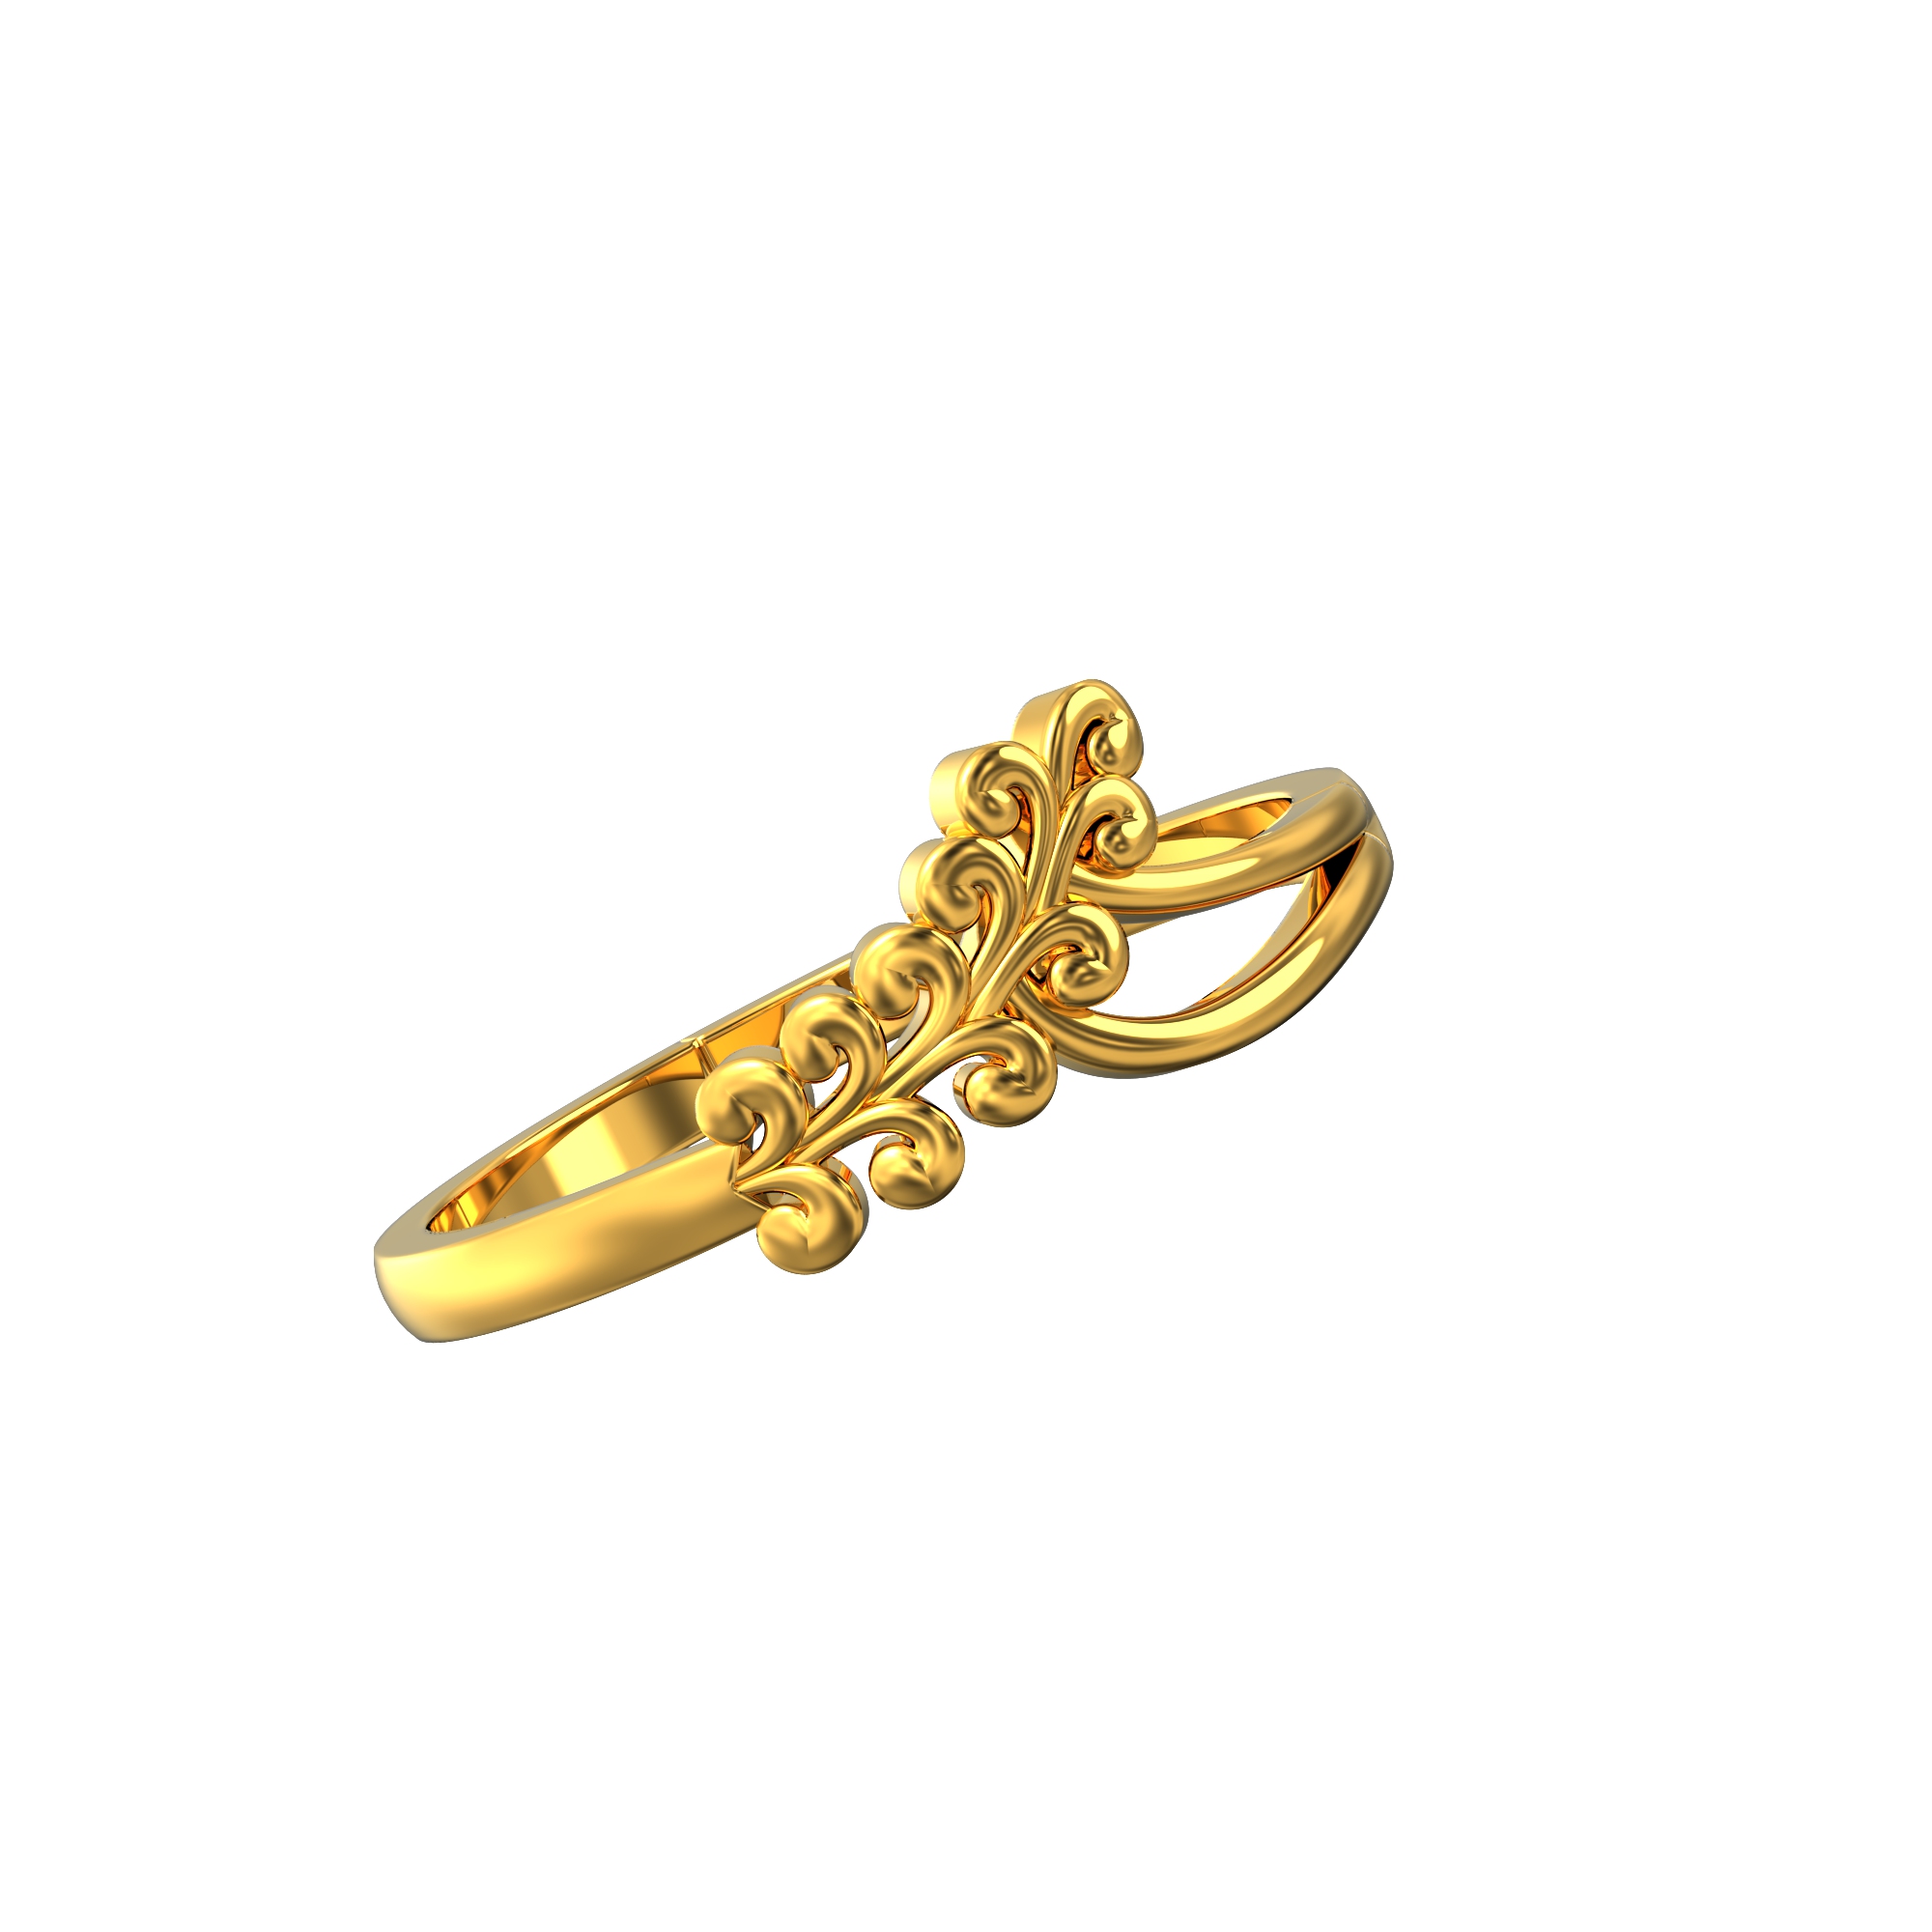 Fascinating 22k Gold Ring for Women